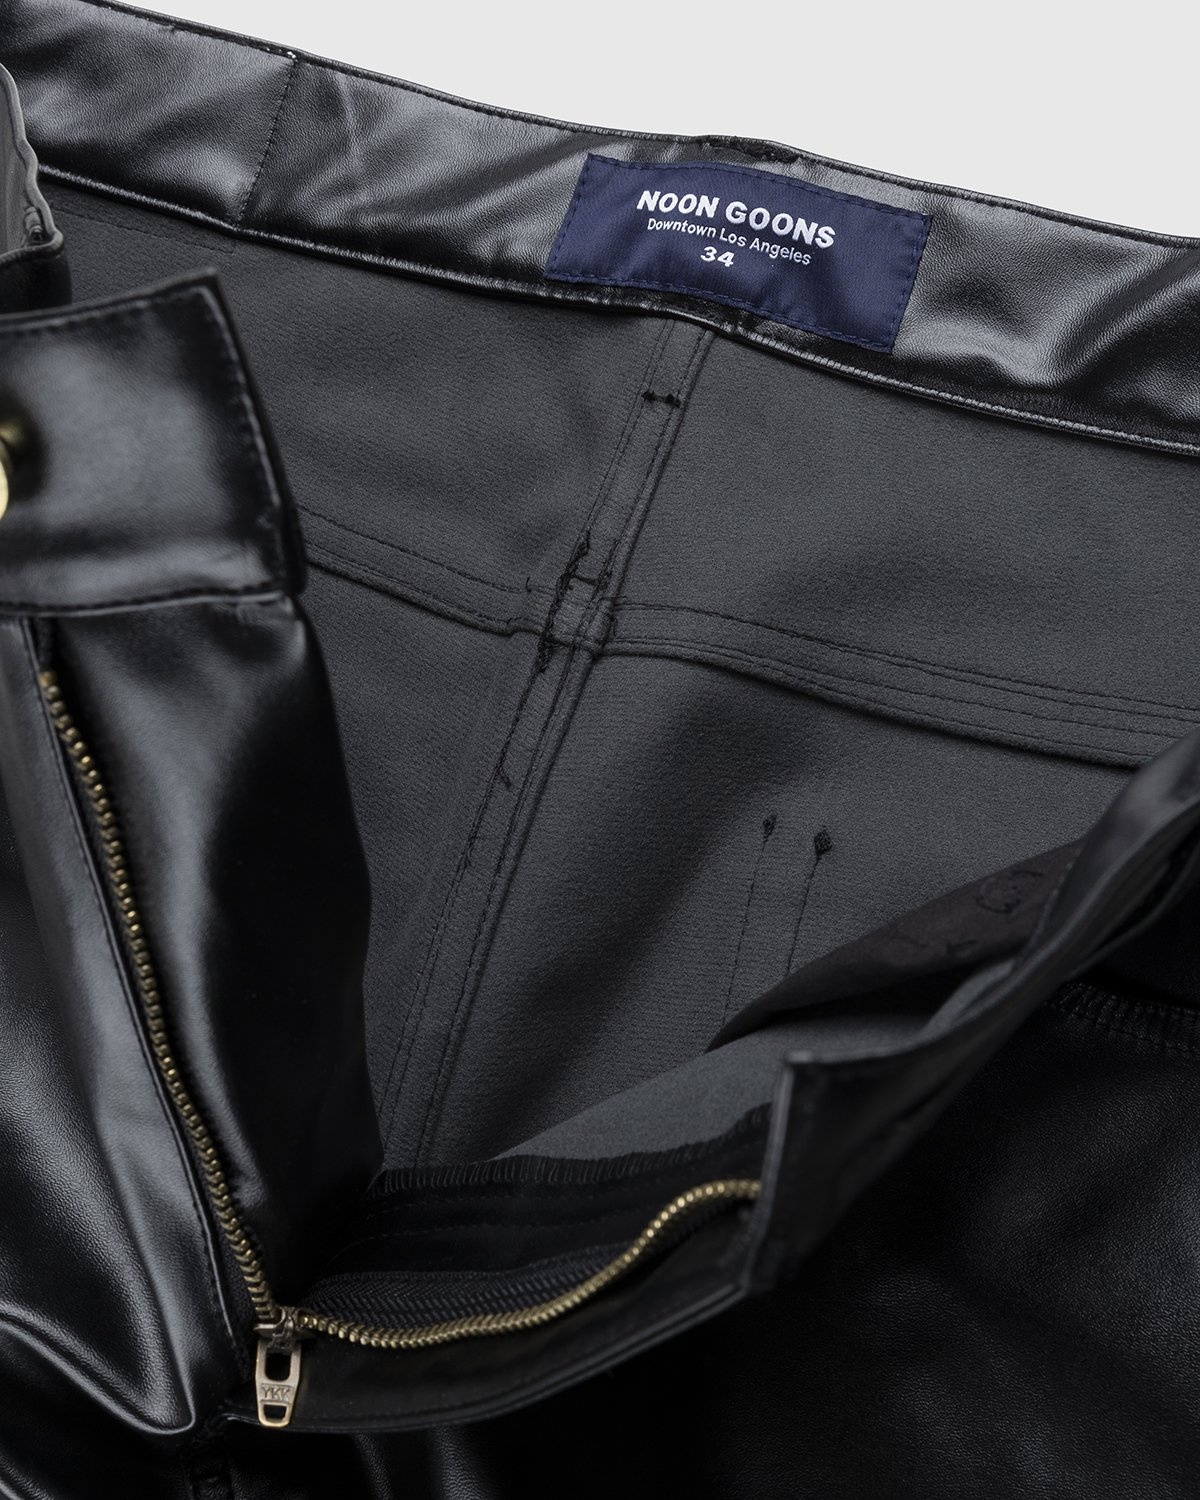 Noon Goons – Series Leather Pant Black - Leather Pants - Black - Image 5